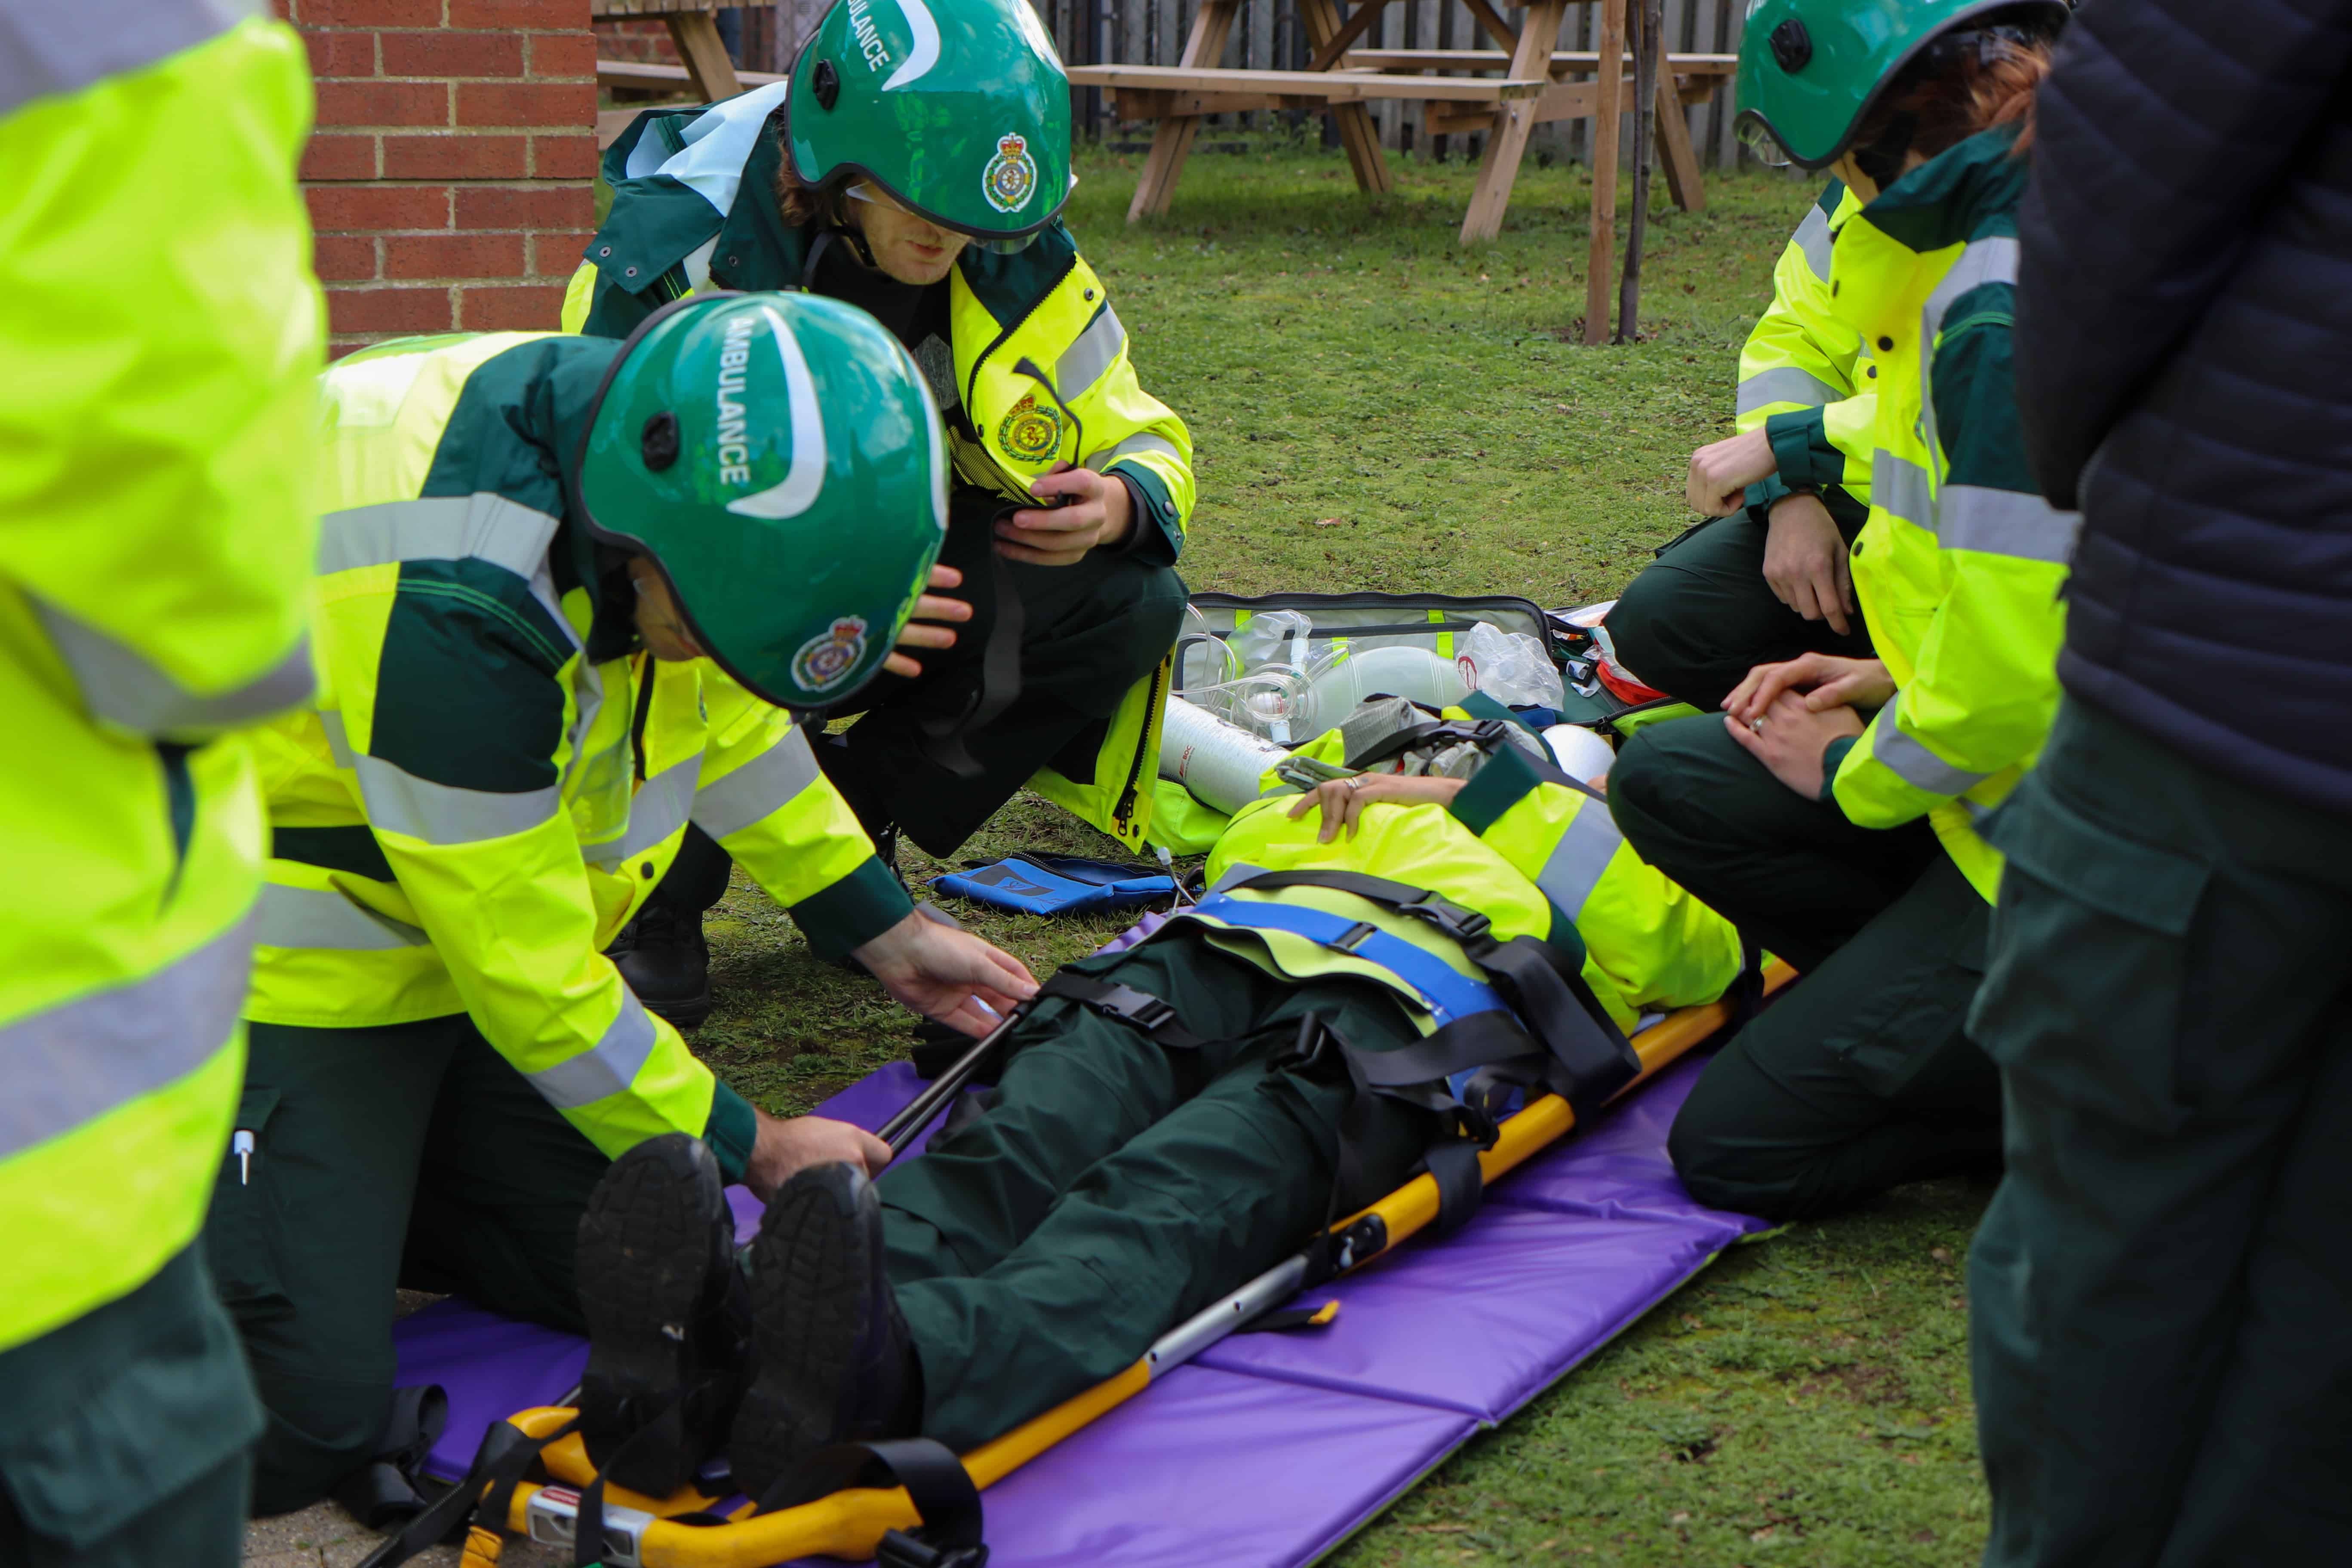 Ambulance apprentices practicing trauma scenarios involving a stretcher